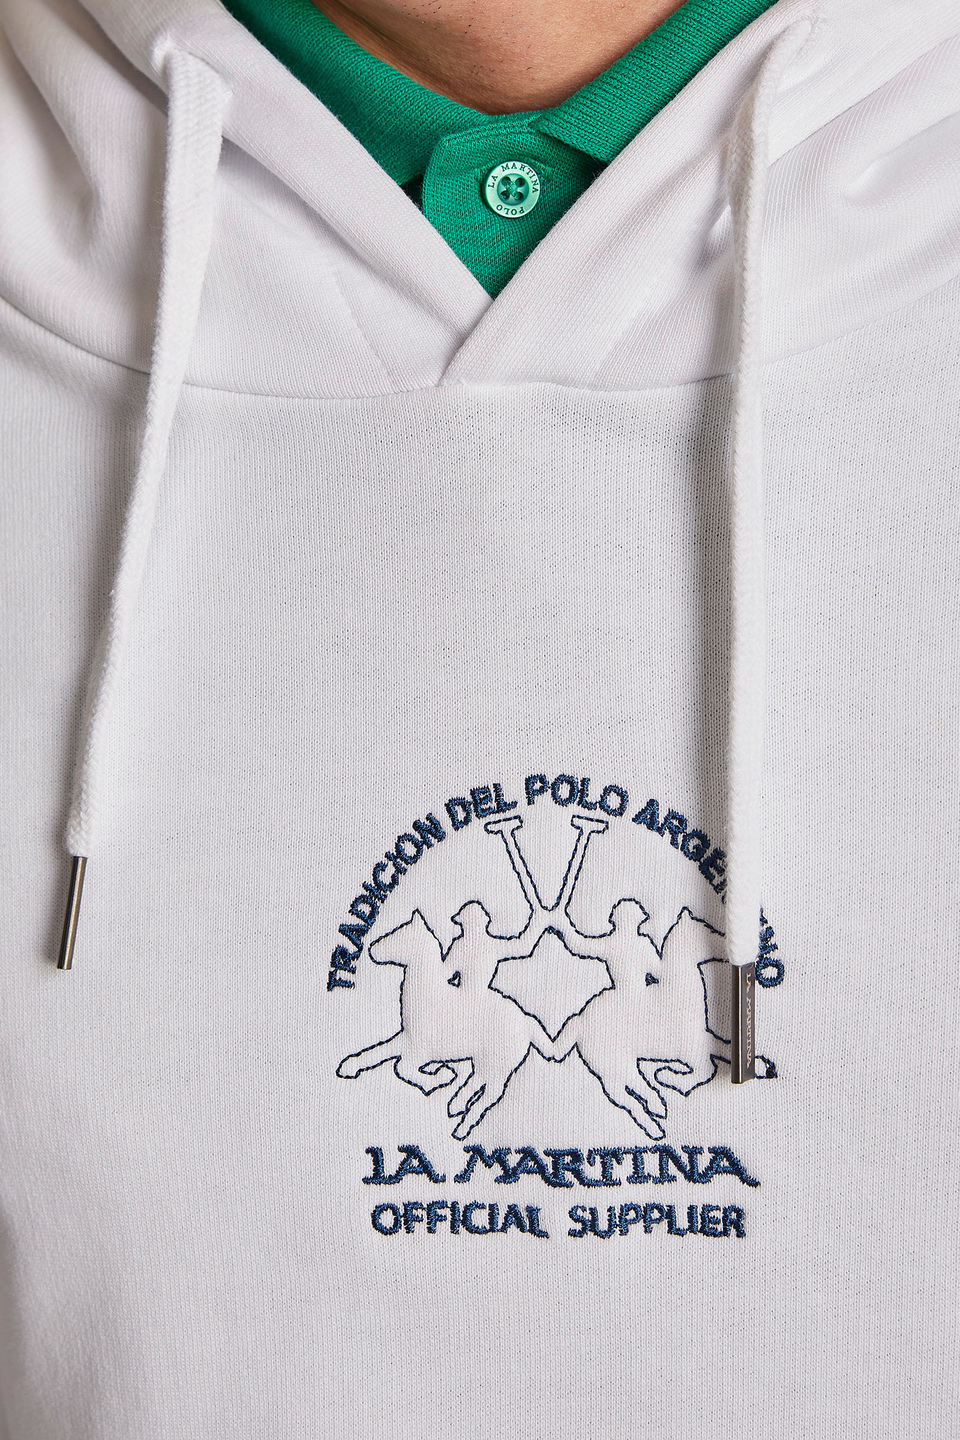 Felpa da uomo in cotone 100% con cappuccio comfort fit - La Martina - Official Online Shop